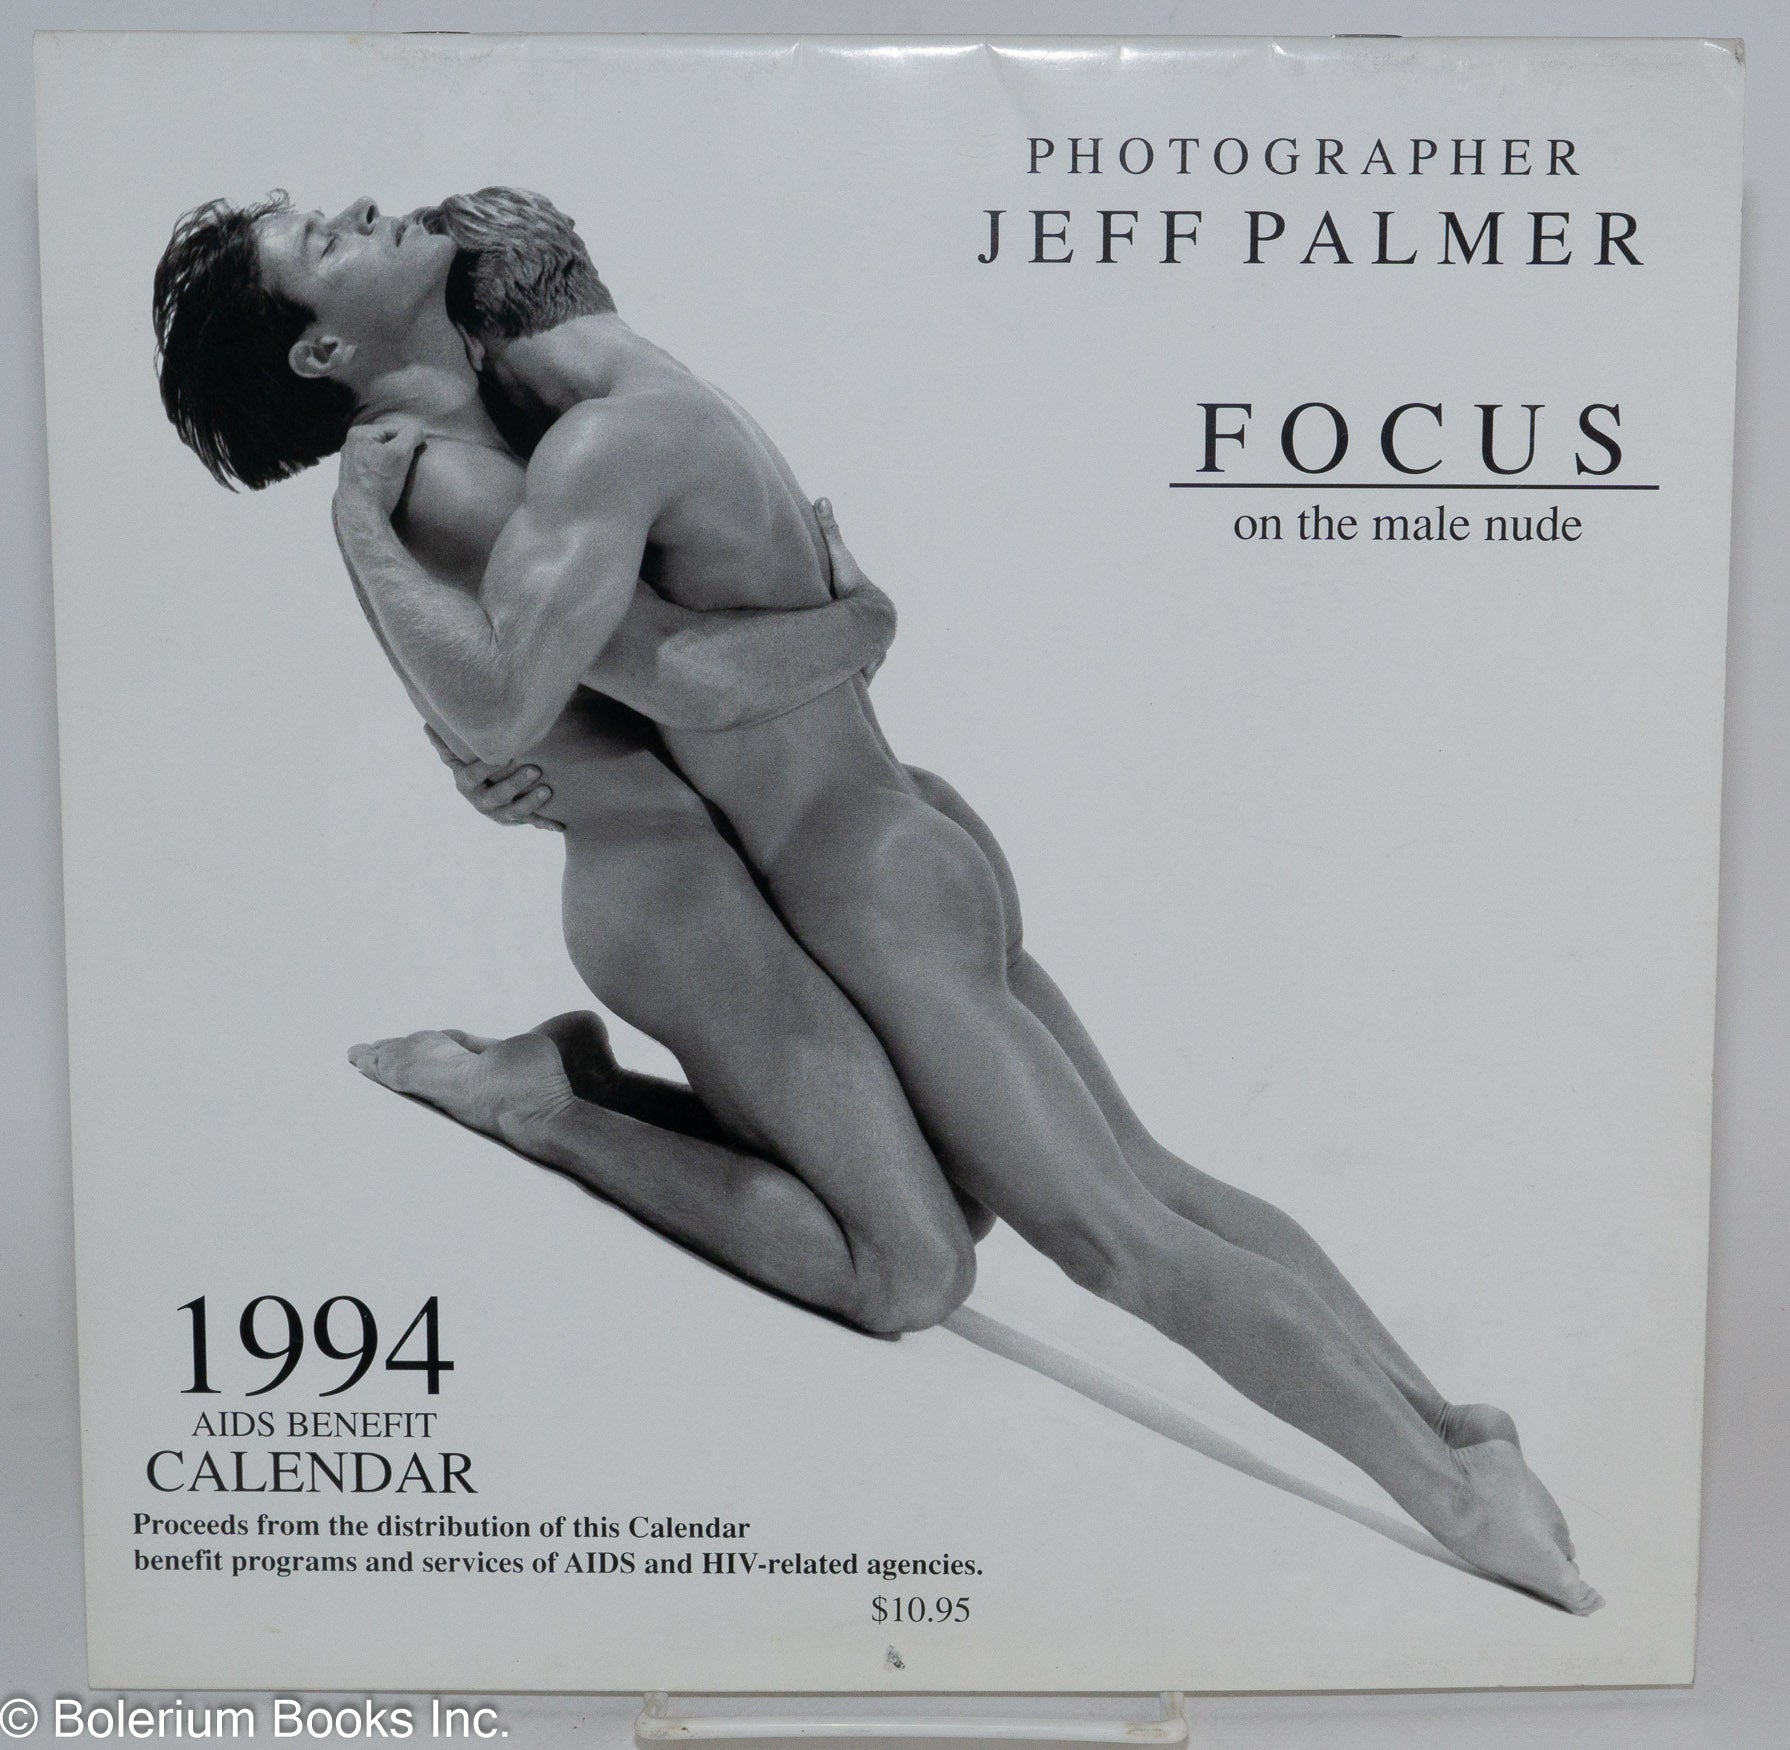 1994 AIDS Benefit Calendar Focus Jeff Palmer, photographer pic photo